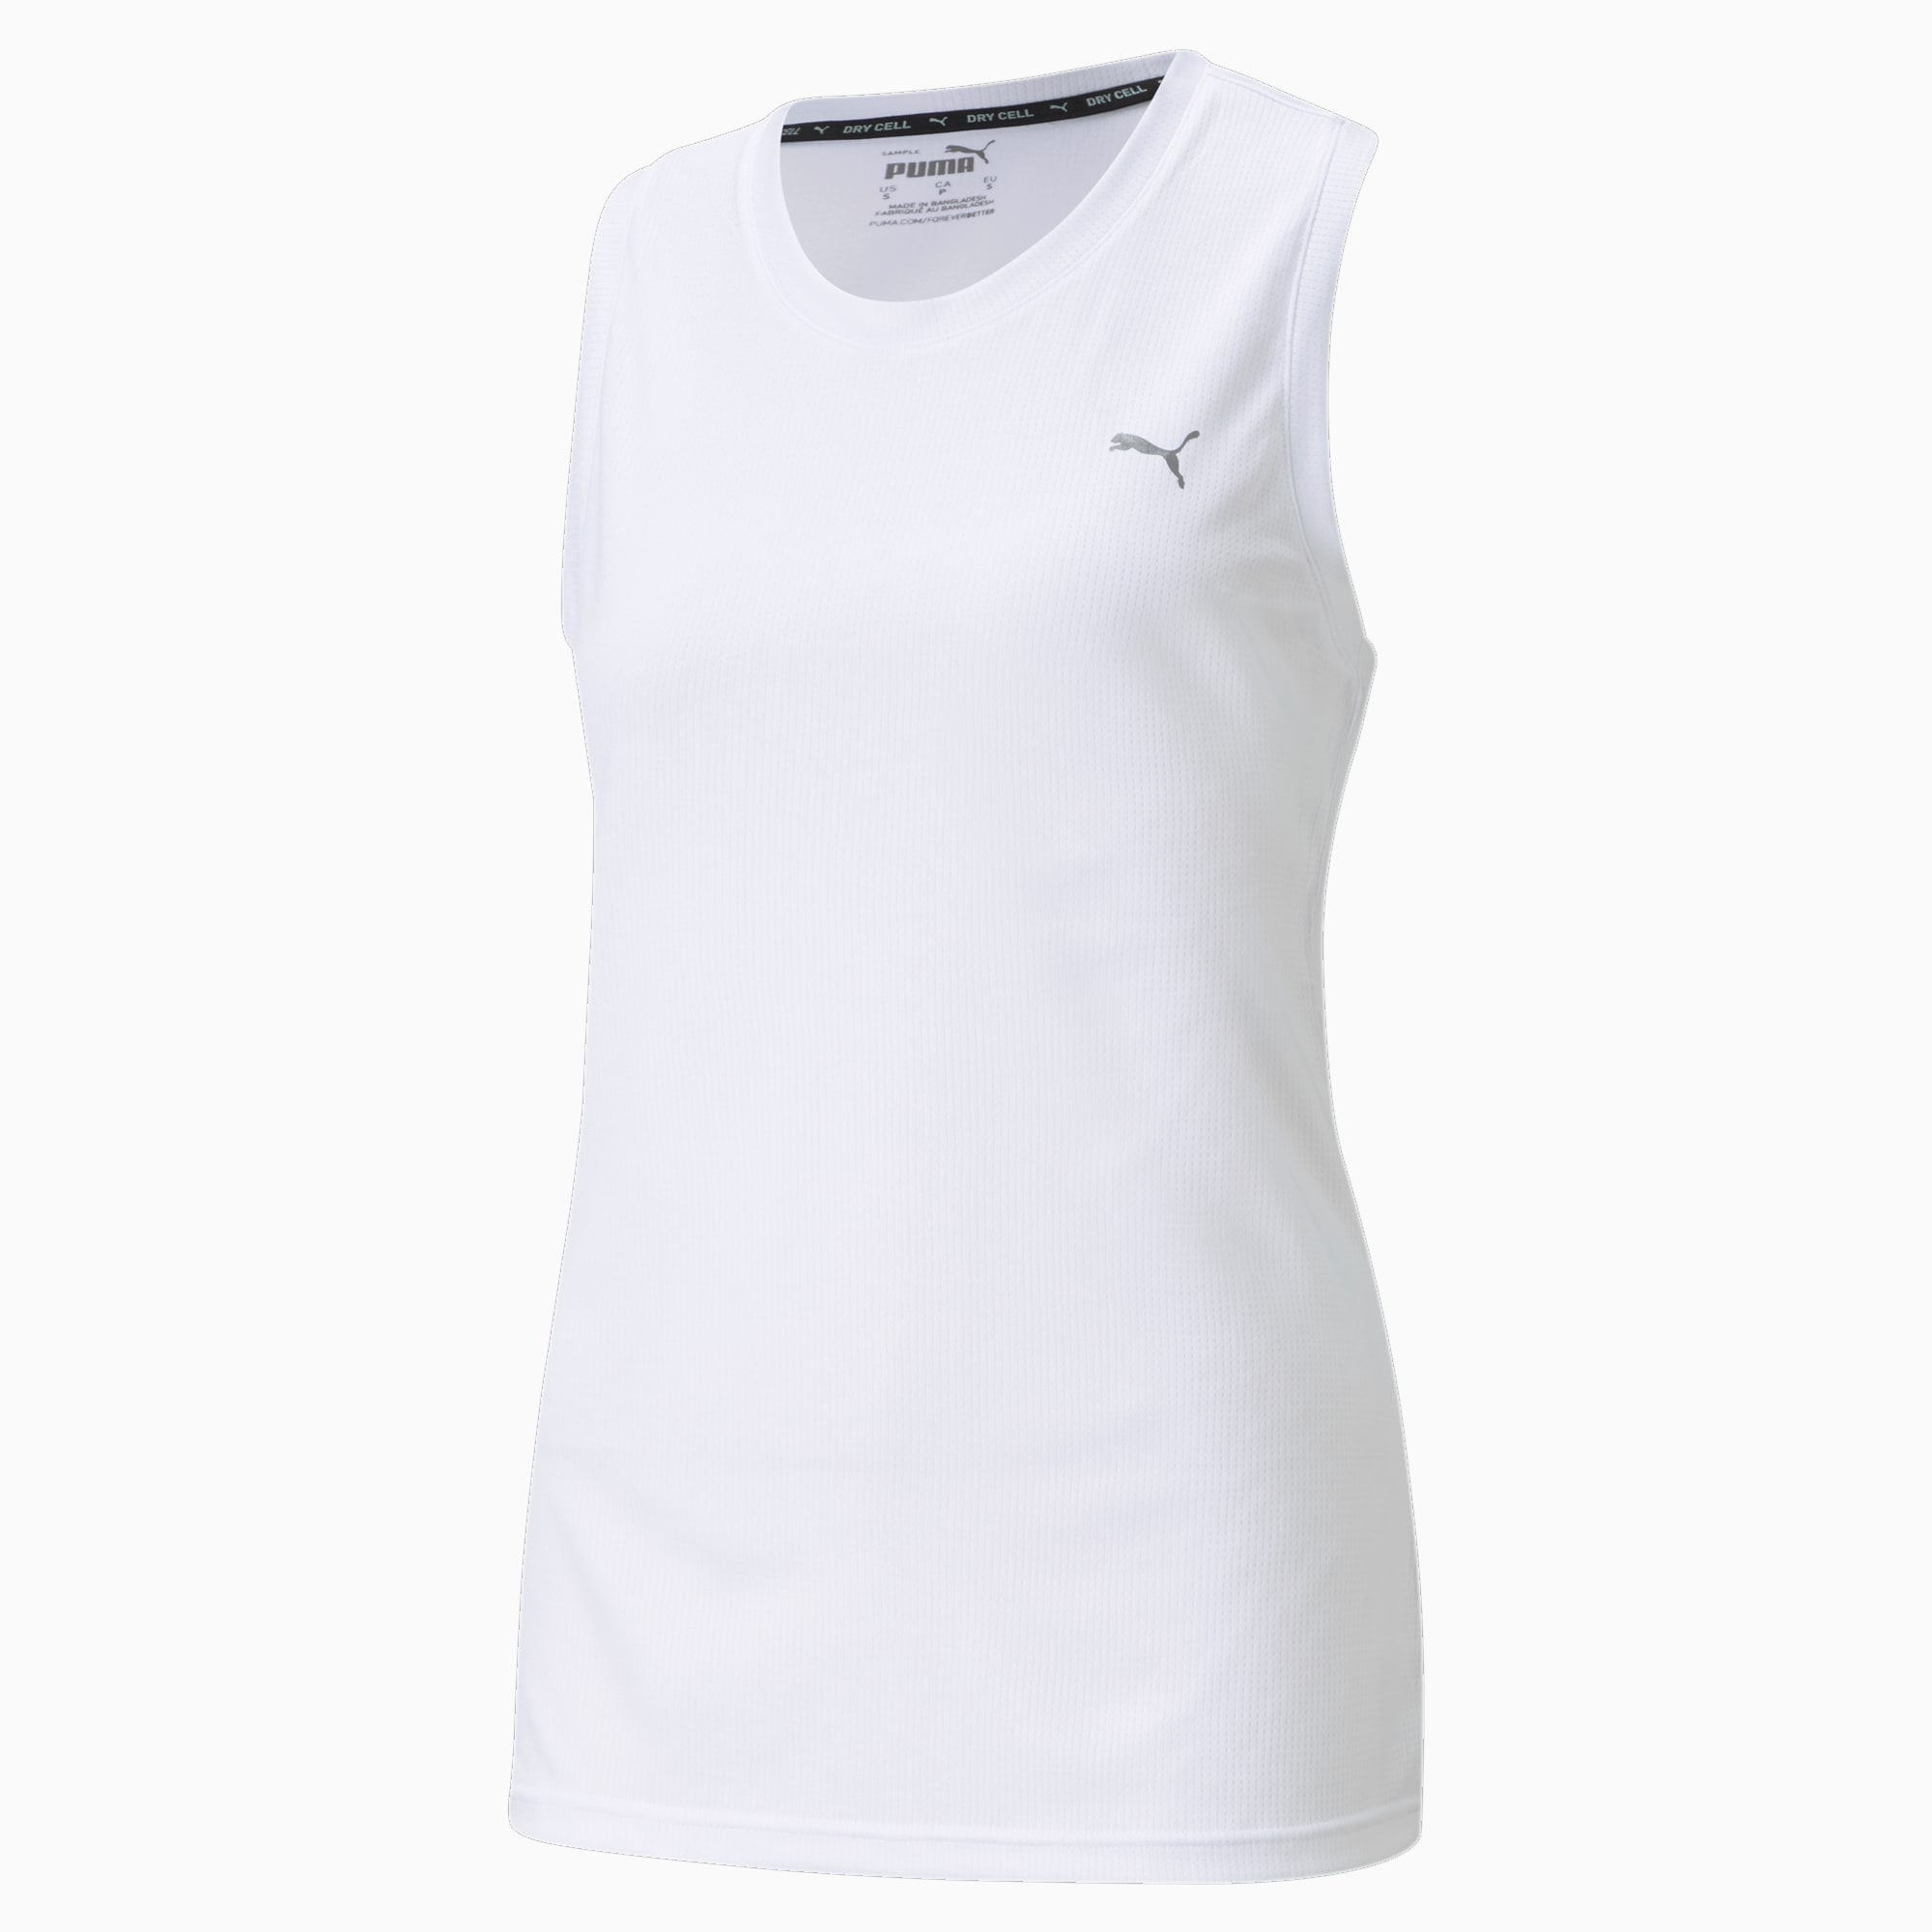 PUMA Performance Women's Training Tank Top Shirt, White, Size 3XL, Clothing